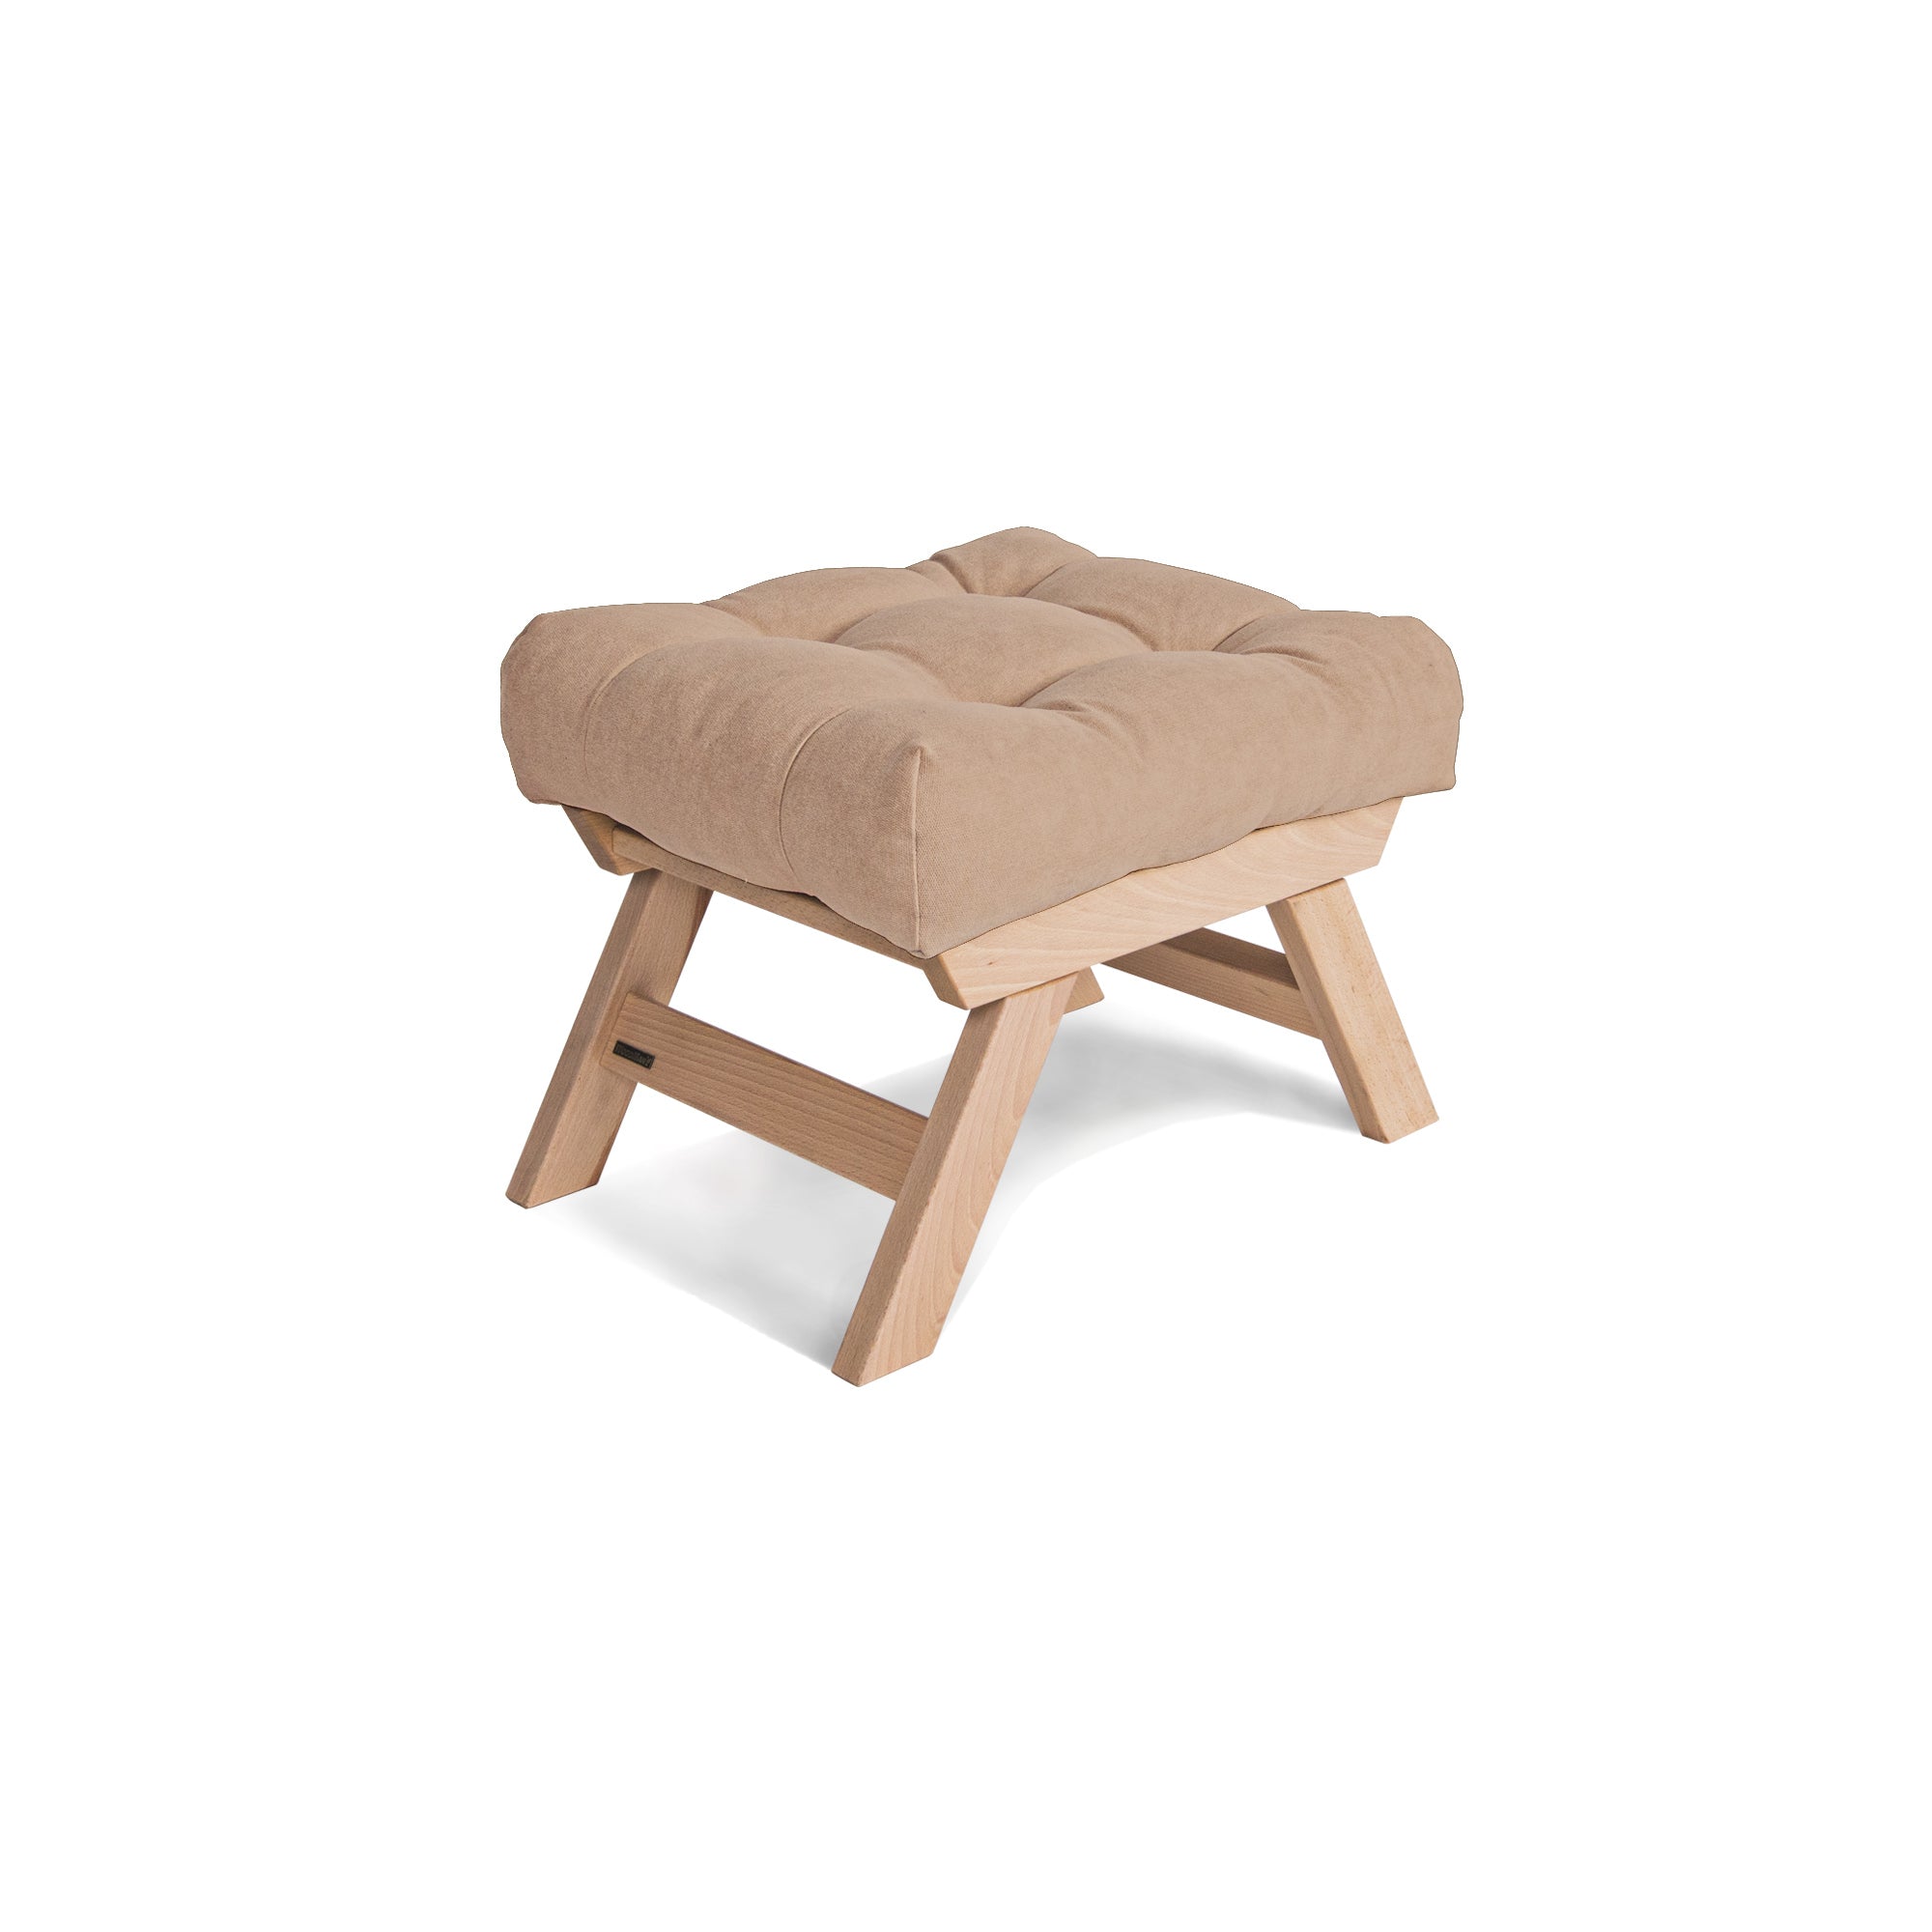 ALLEGRO Pouffe, Beech Wood upholstery colour beige